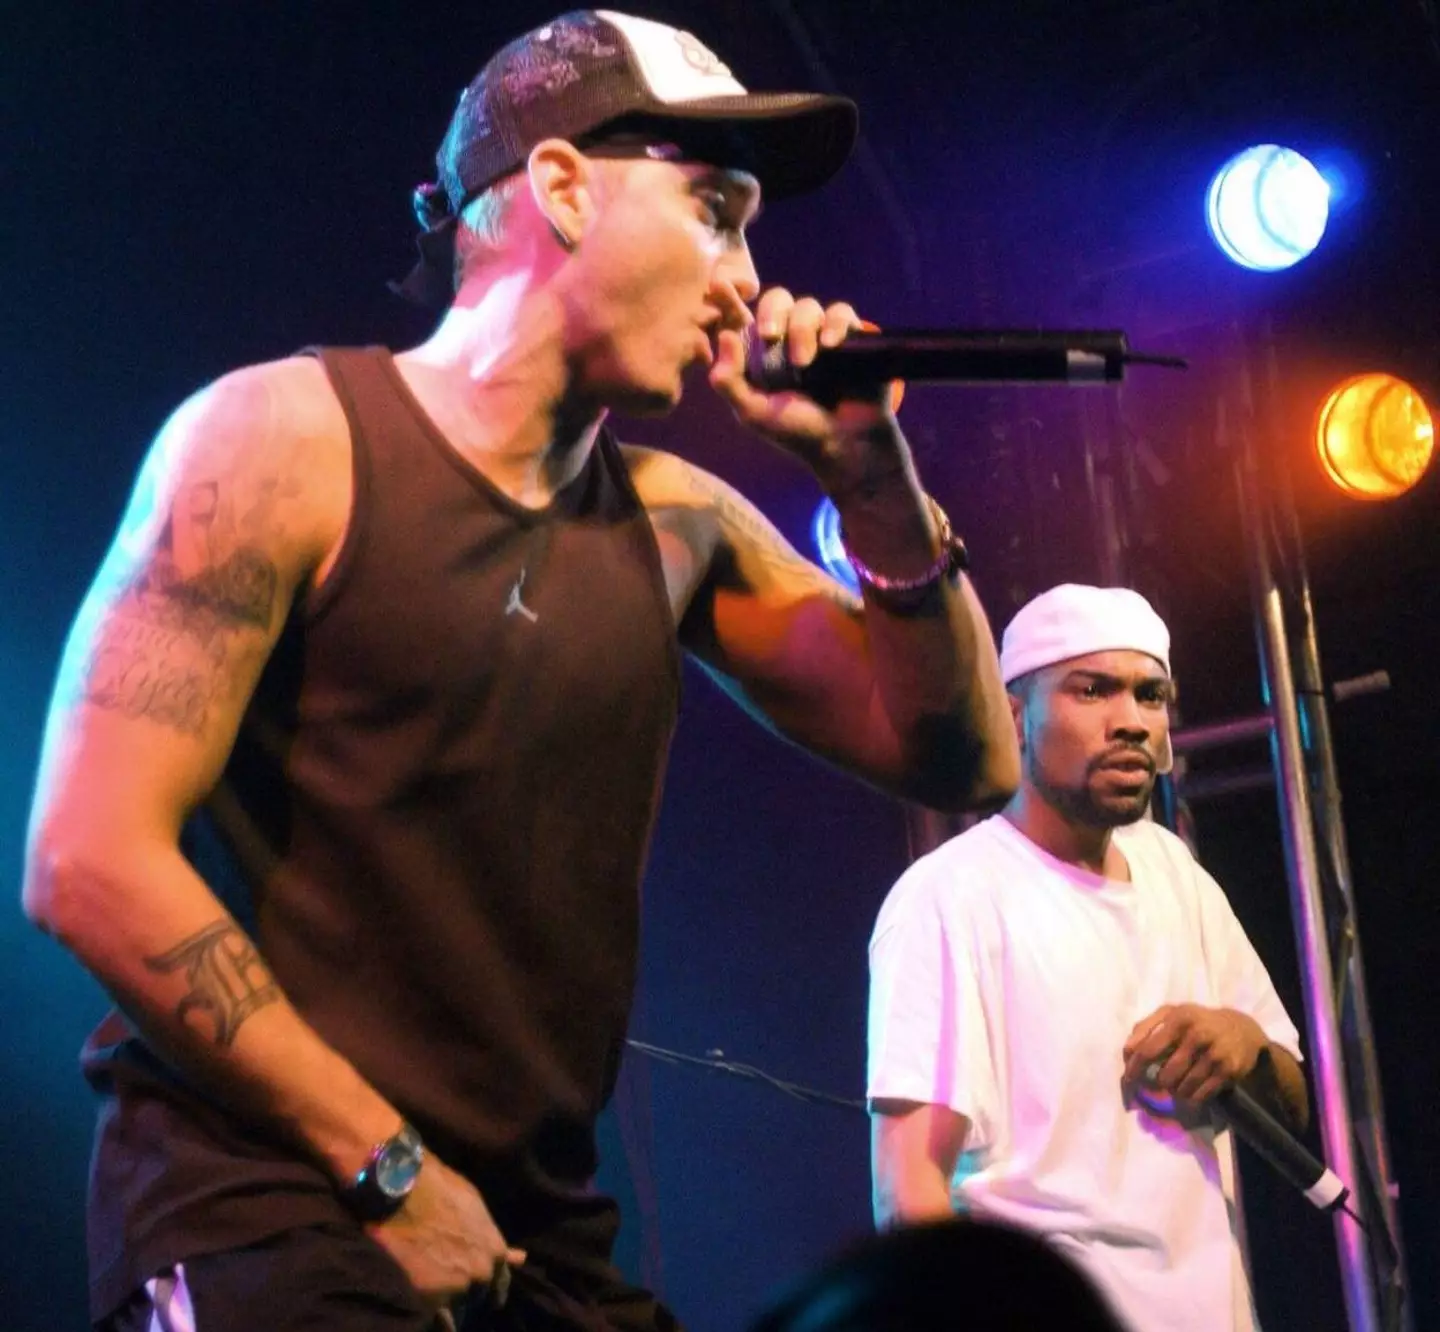 Eminem and Proof go way back.